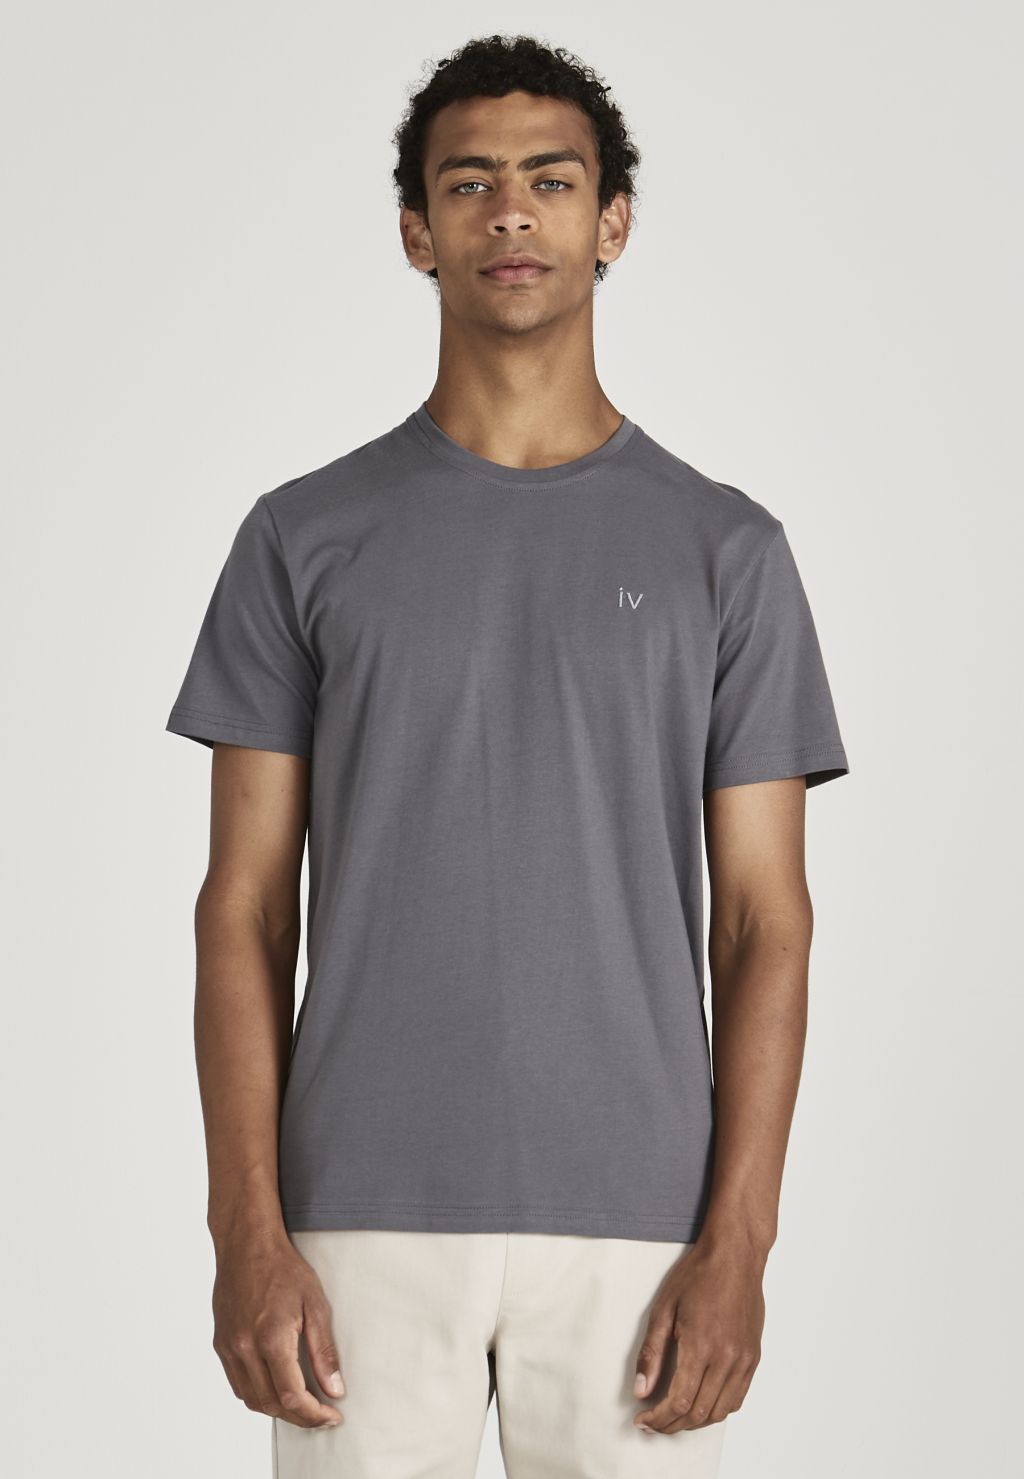 Colby (Iv) - T-Shirt - Bio-Baumwolle - Shadow Grey S